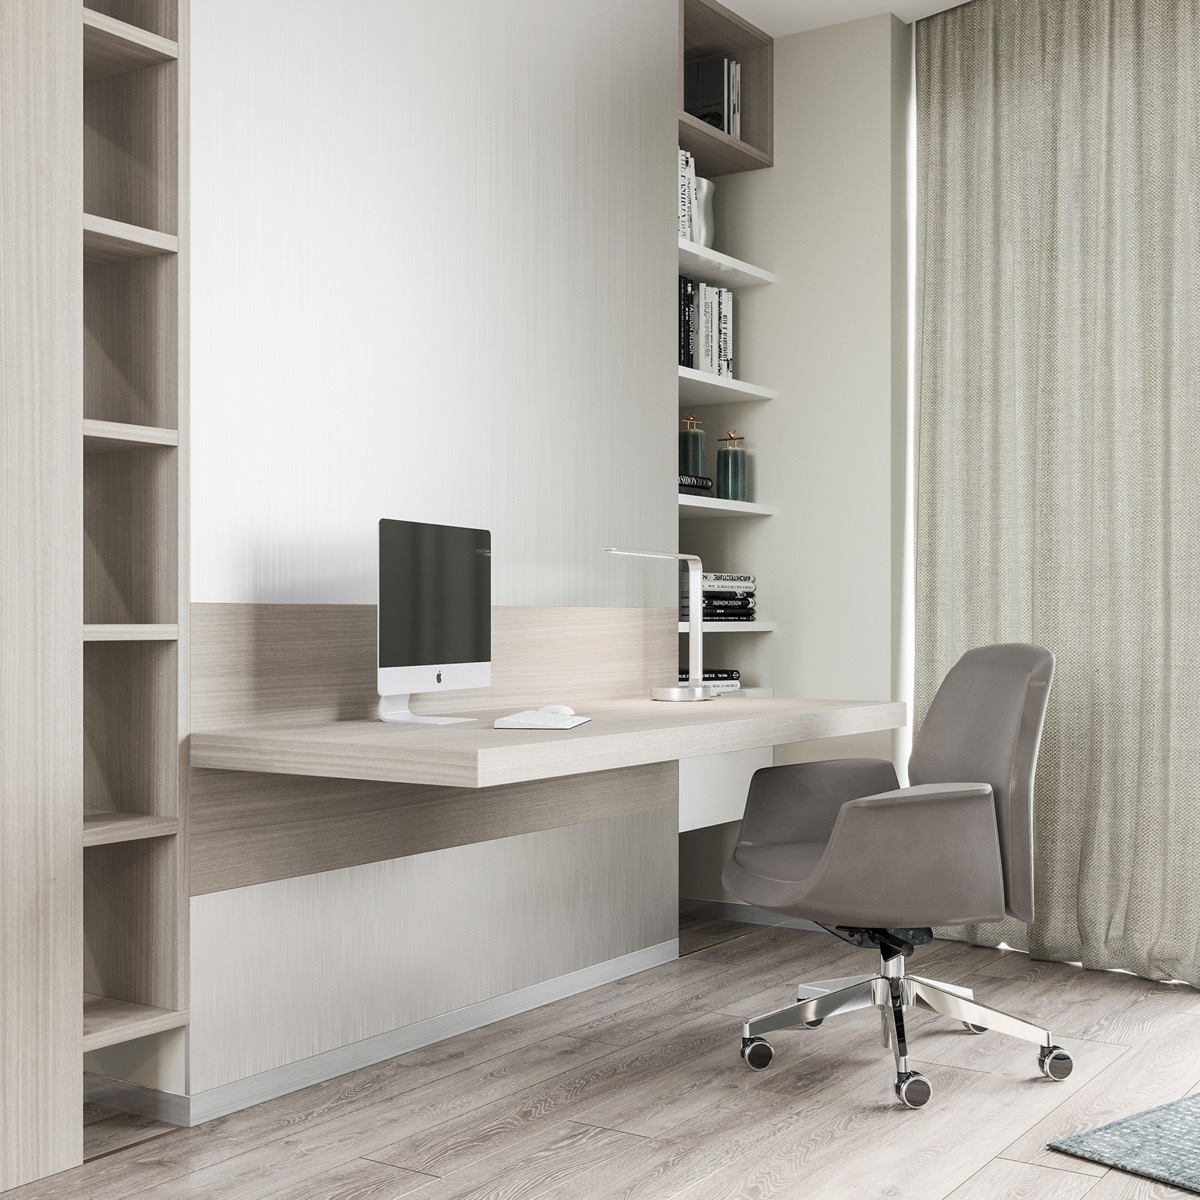 Unique Simple Office Interior Design Ideas for Small Space